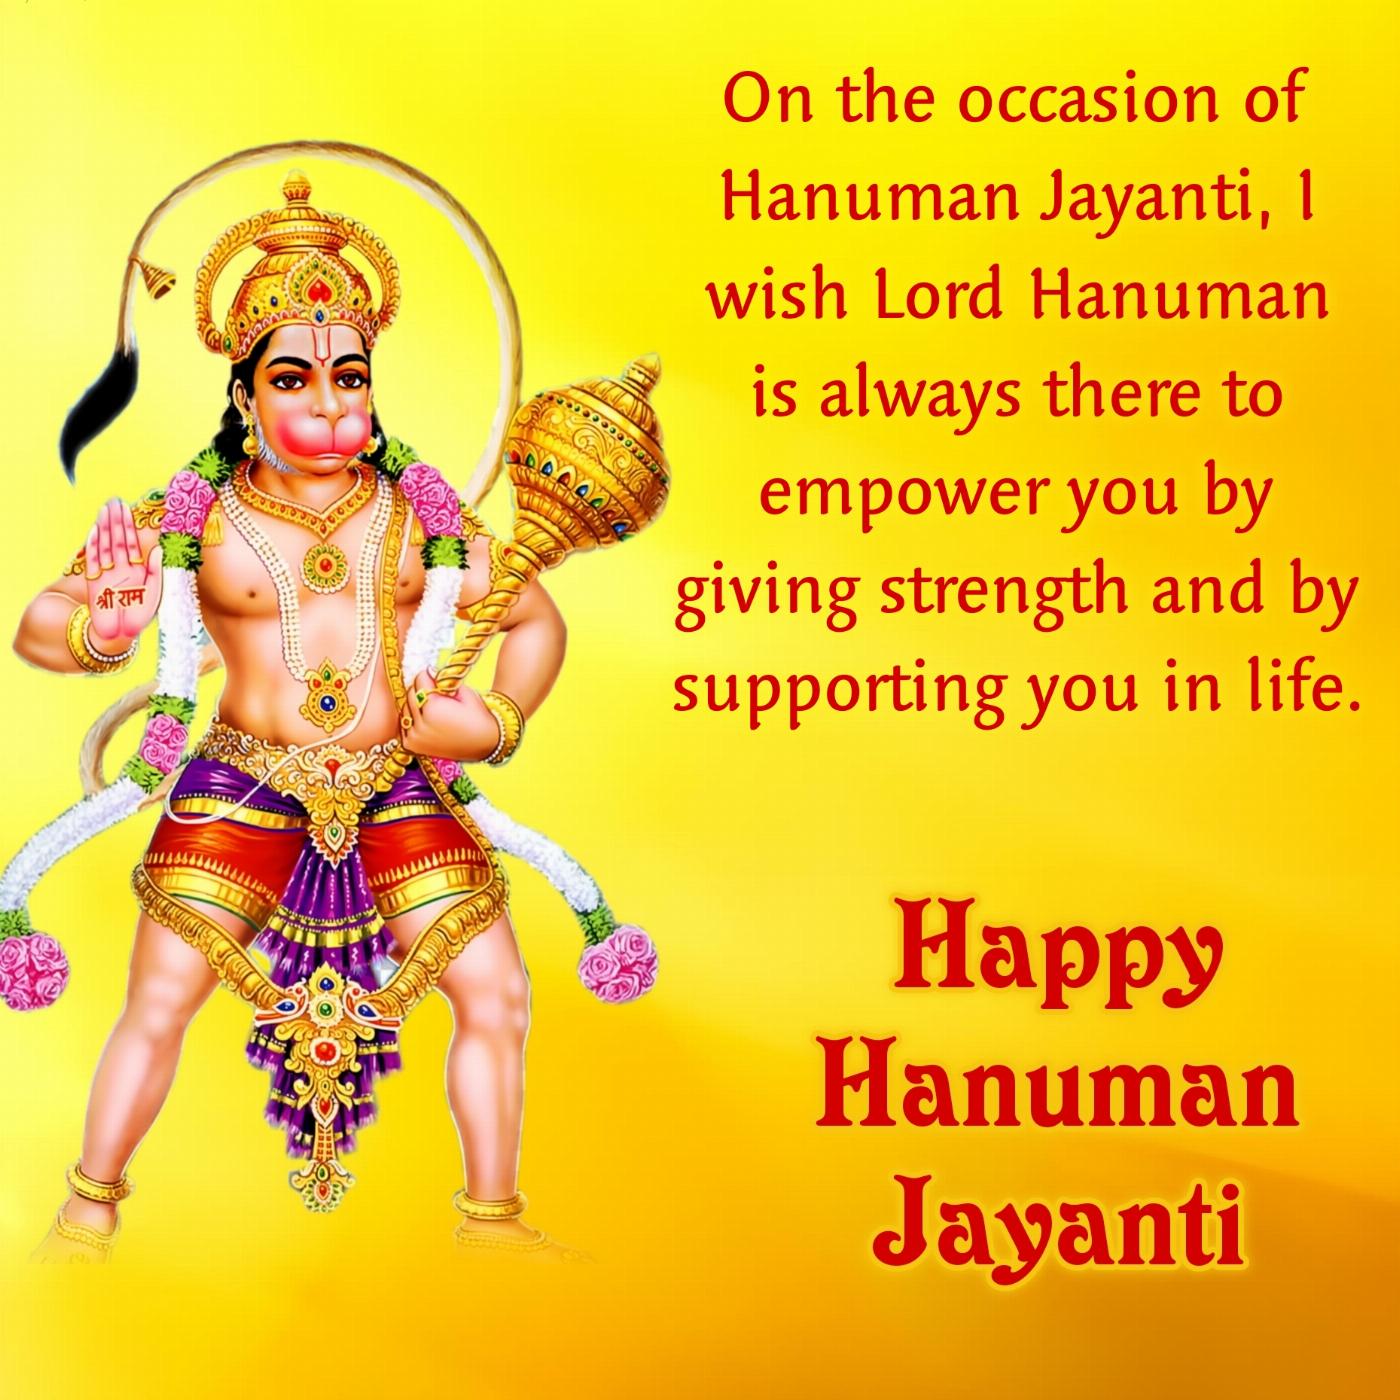 On the occasion of Hanuman Jayanti I wish Lord Hanuman